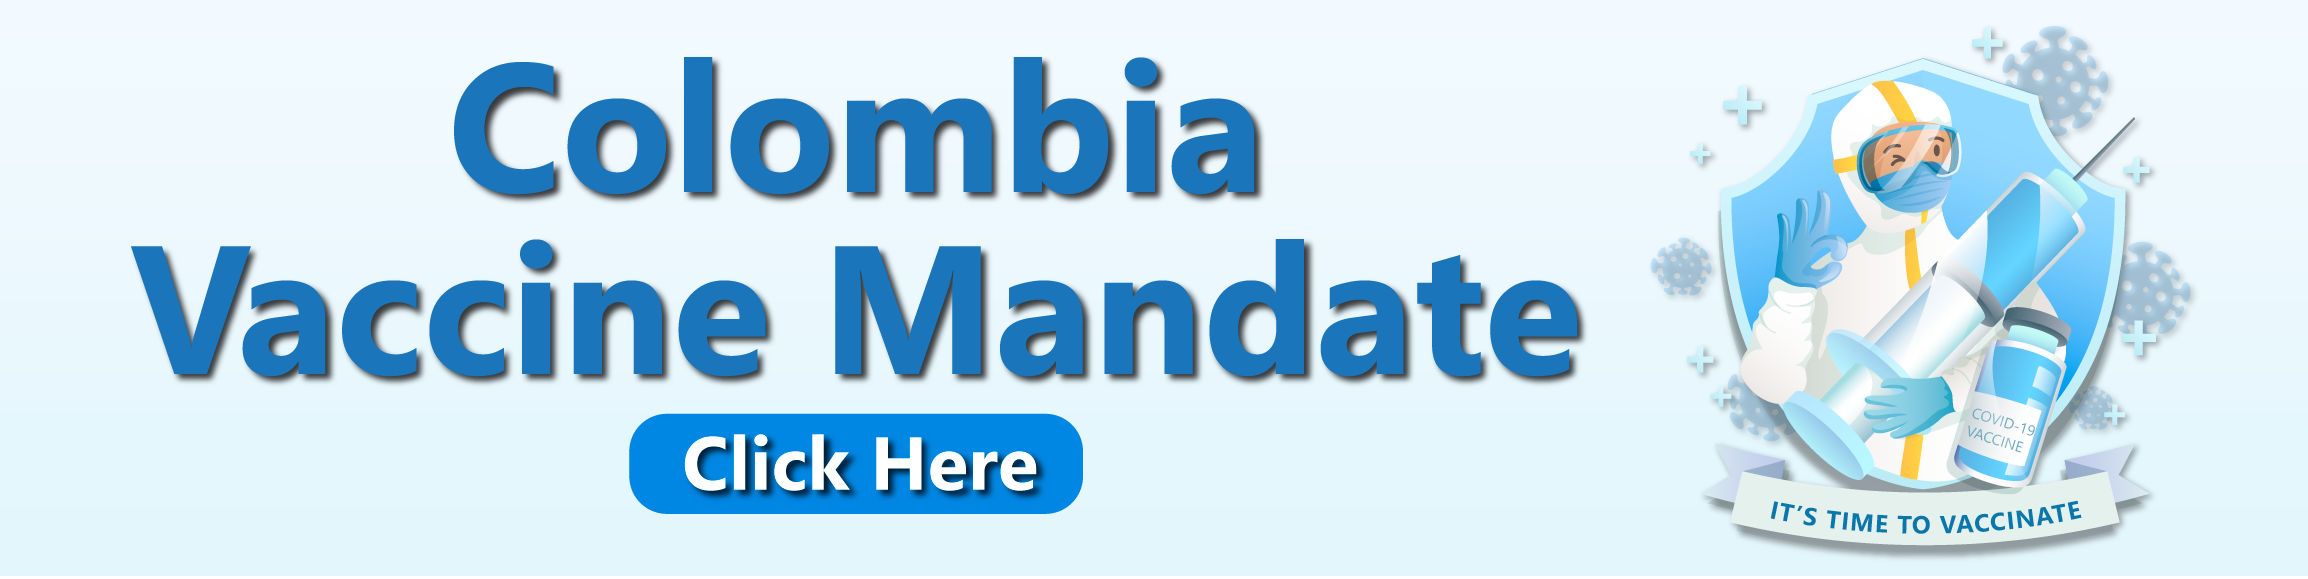 Colombia Vaccine Mandate